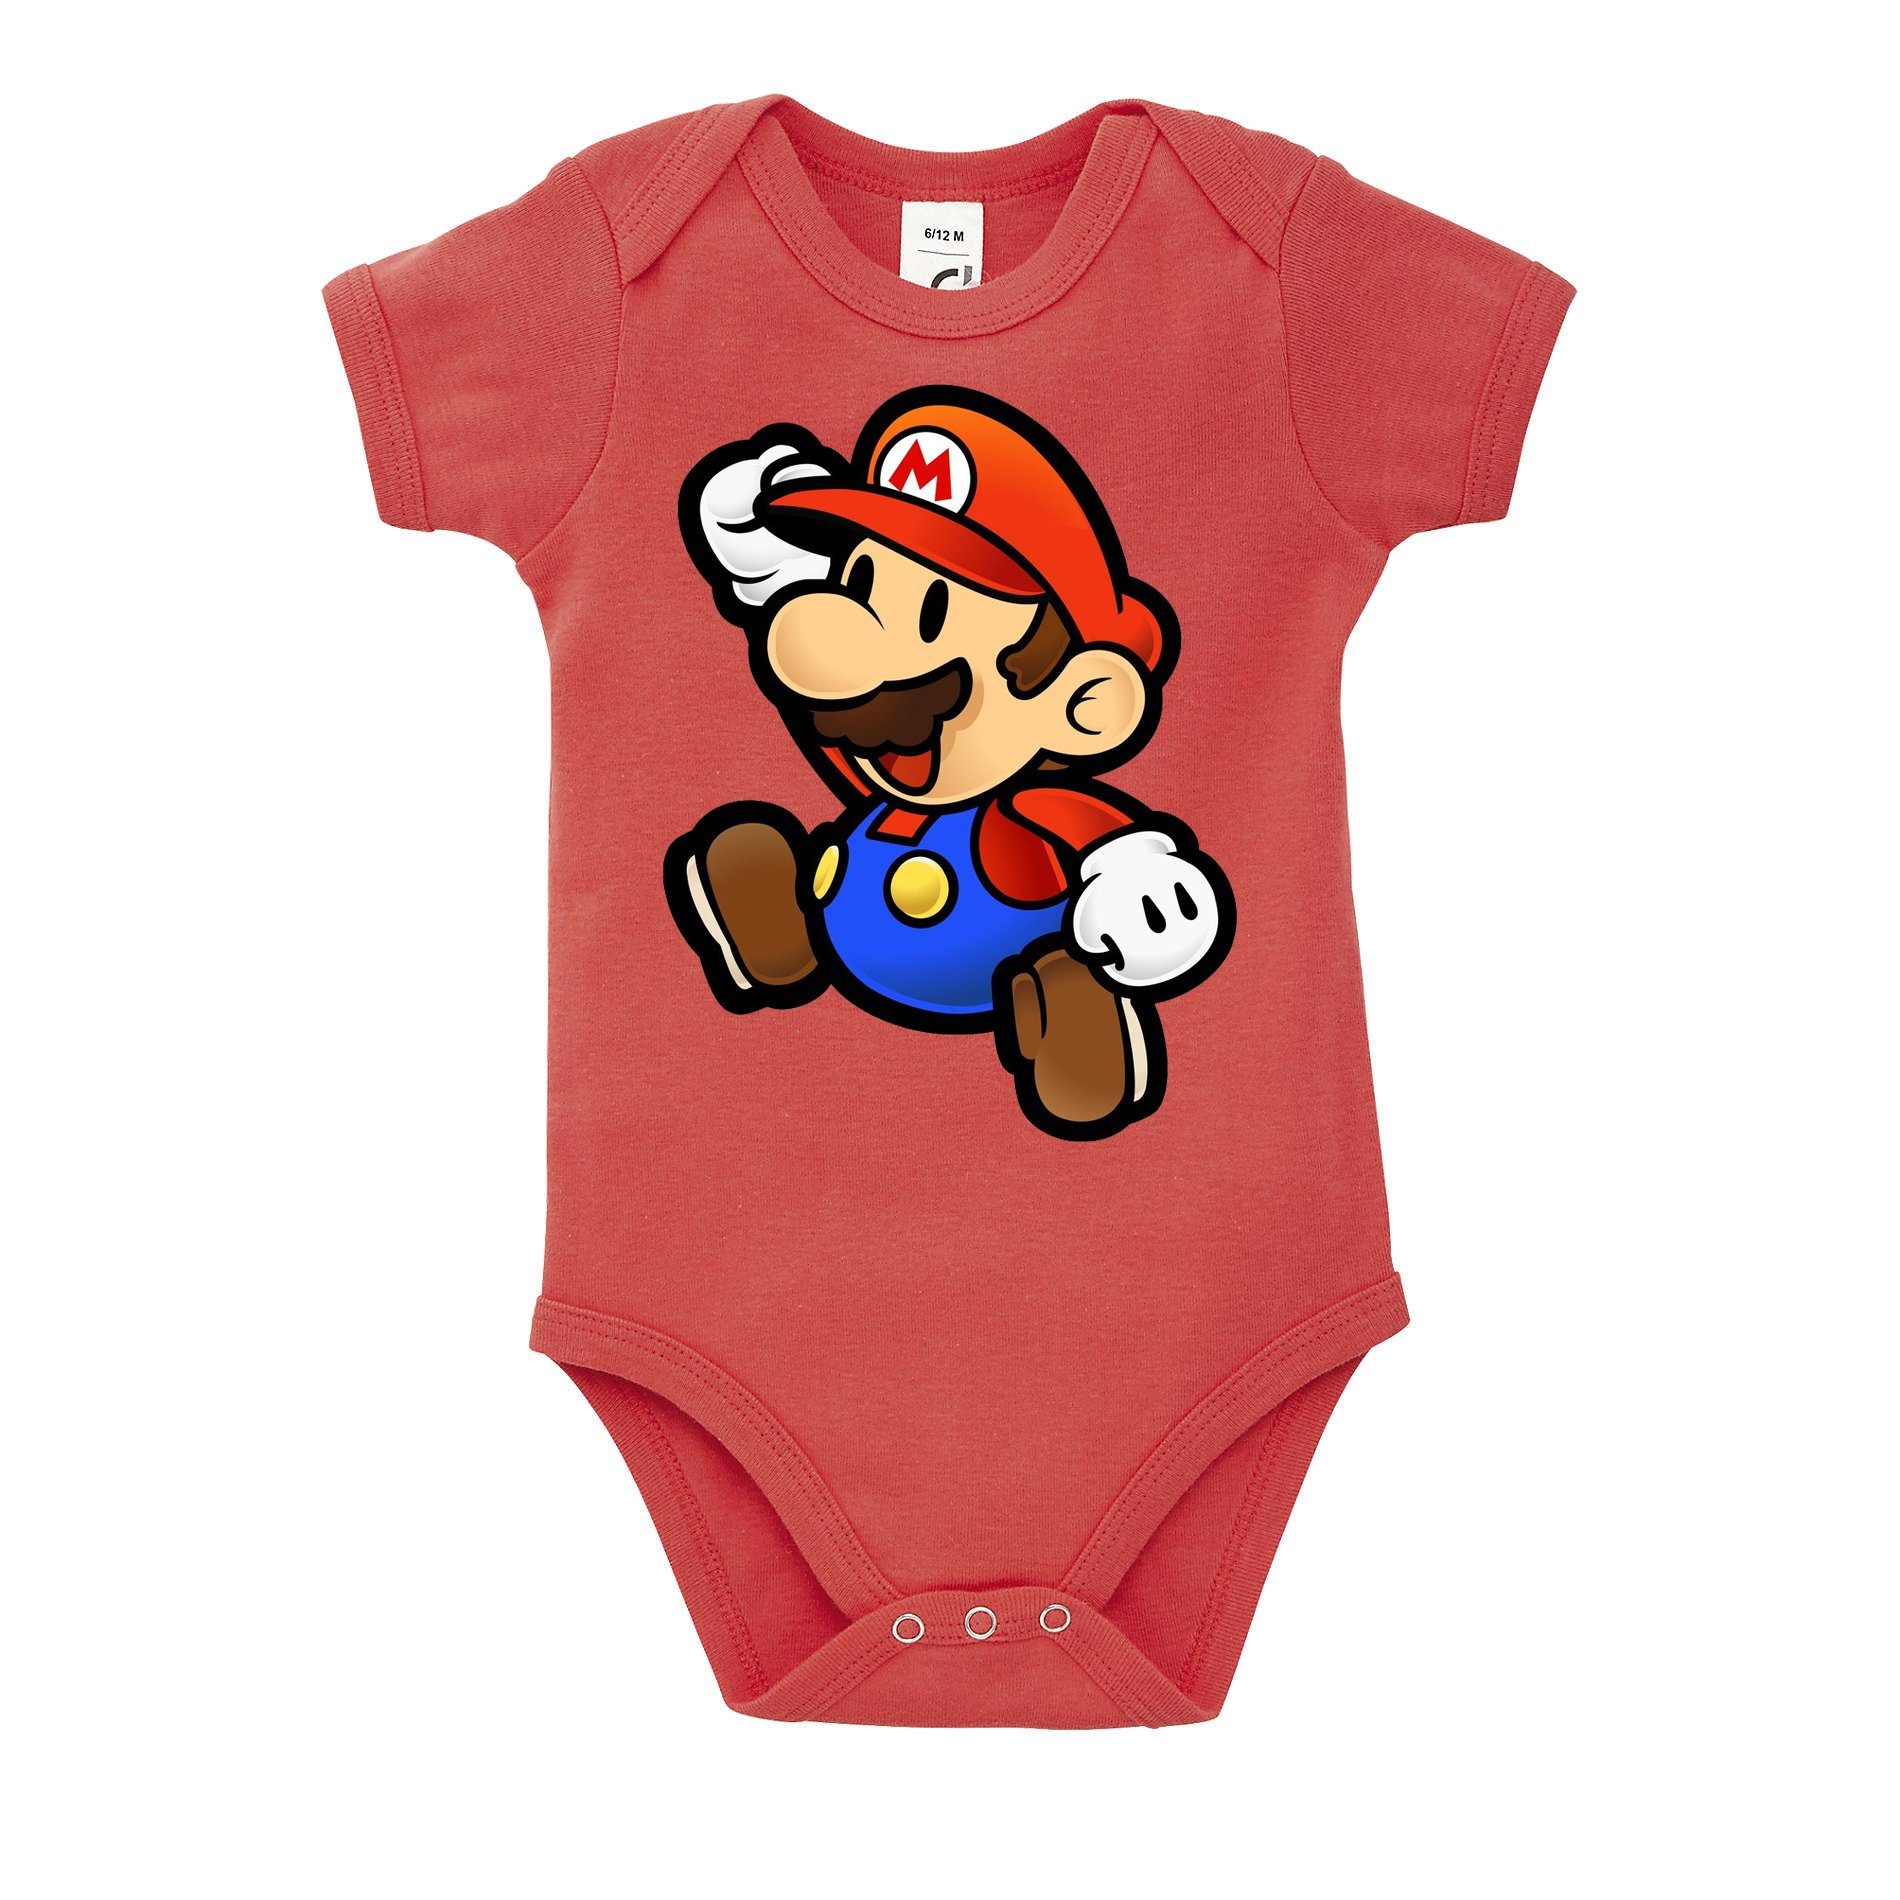 Blondie & Brownie Strampler Kinder Baby Mario Nintendo Gaming Luigi Yoshi Super mit Druckknopf Rot | Sommeroveralls